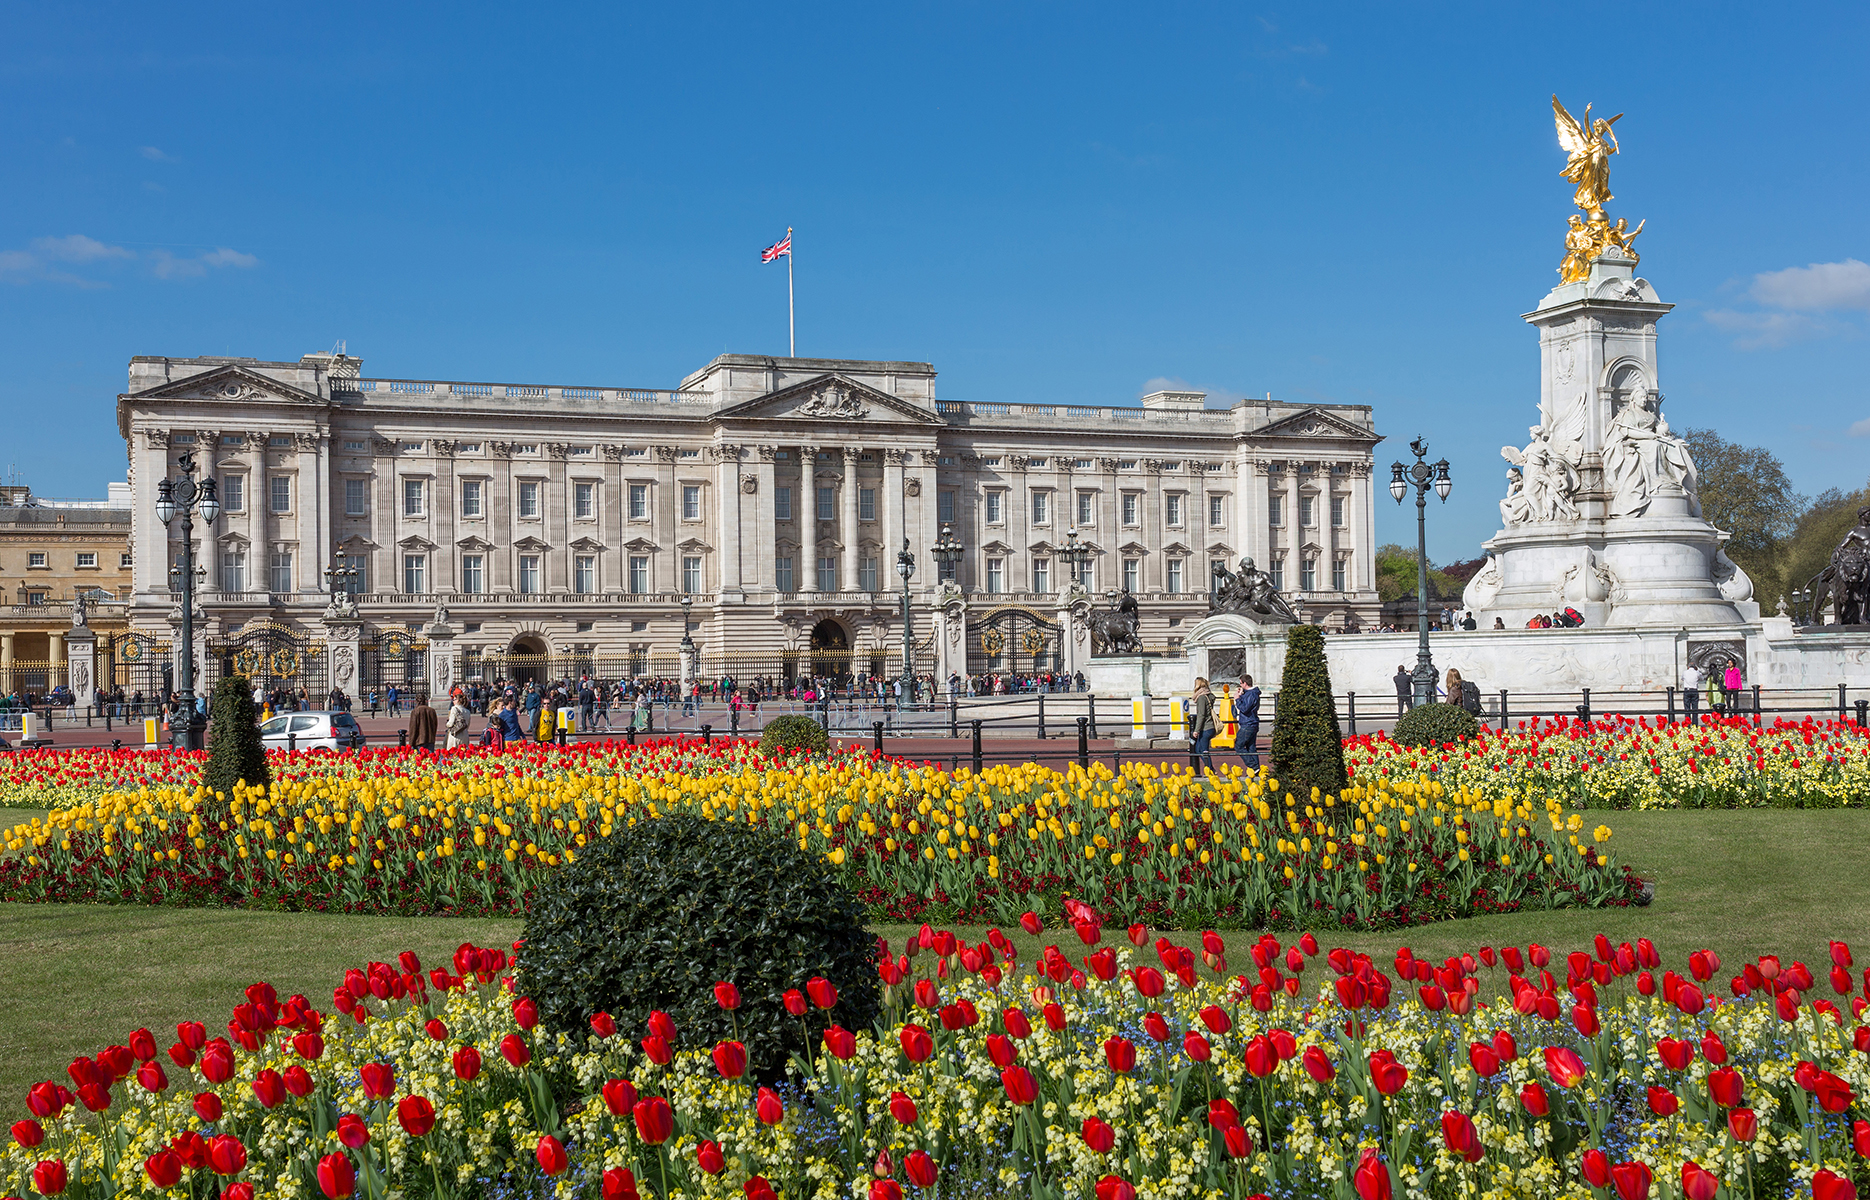 Cung điện Buckingham - Buckingham Palace | Yeudulich